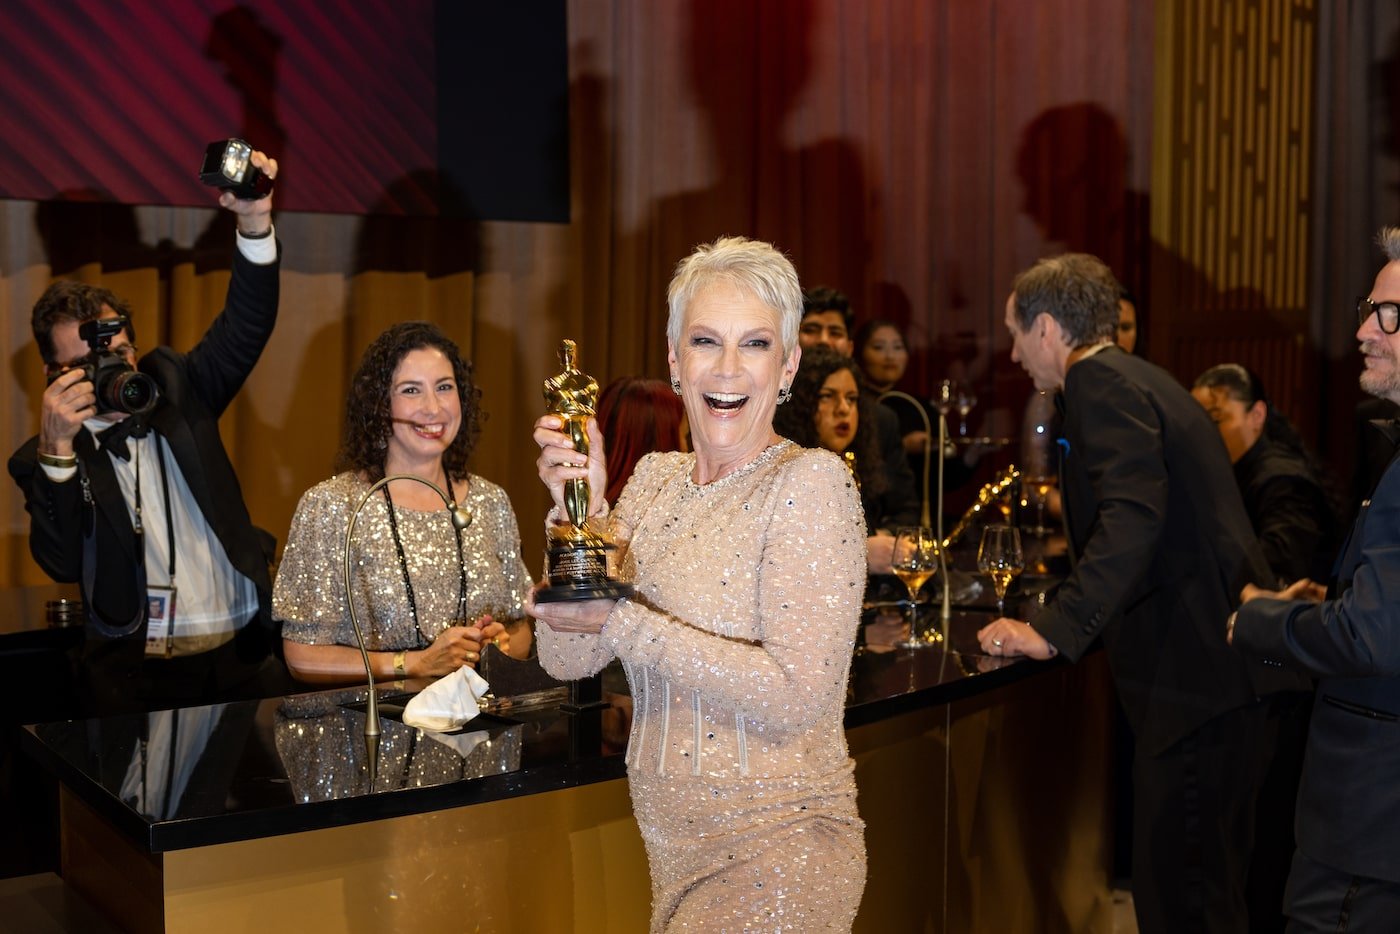 'RHOBH' Fans Embrace Jamie Lee Curtis's 'Chic' Oscar Win as Series 'Friend'